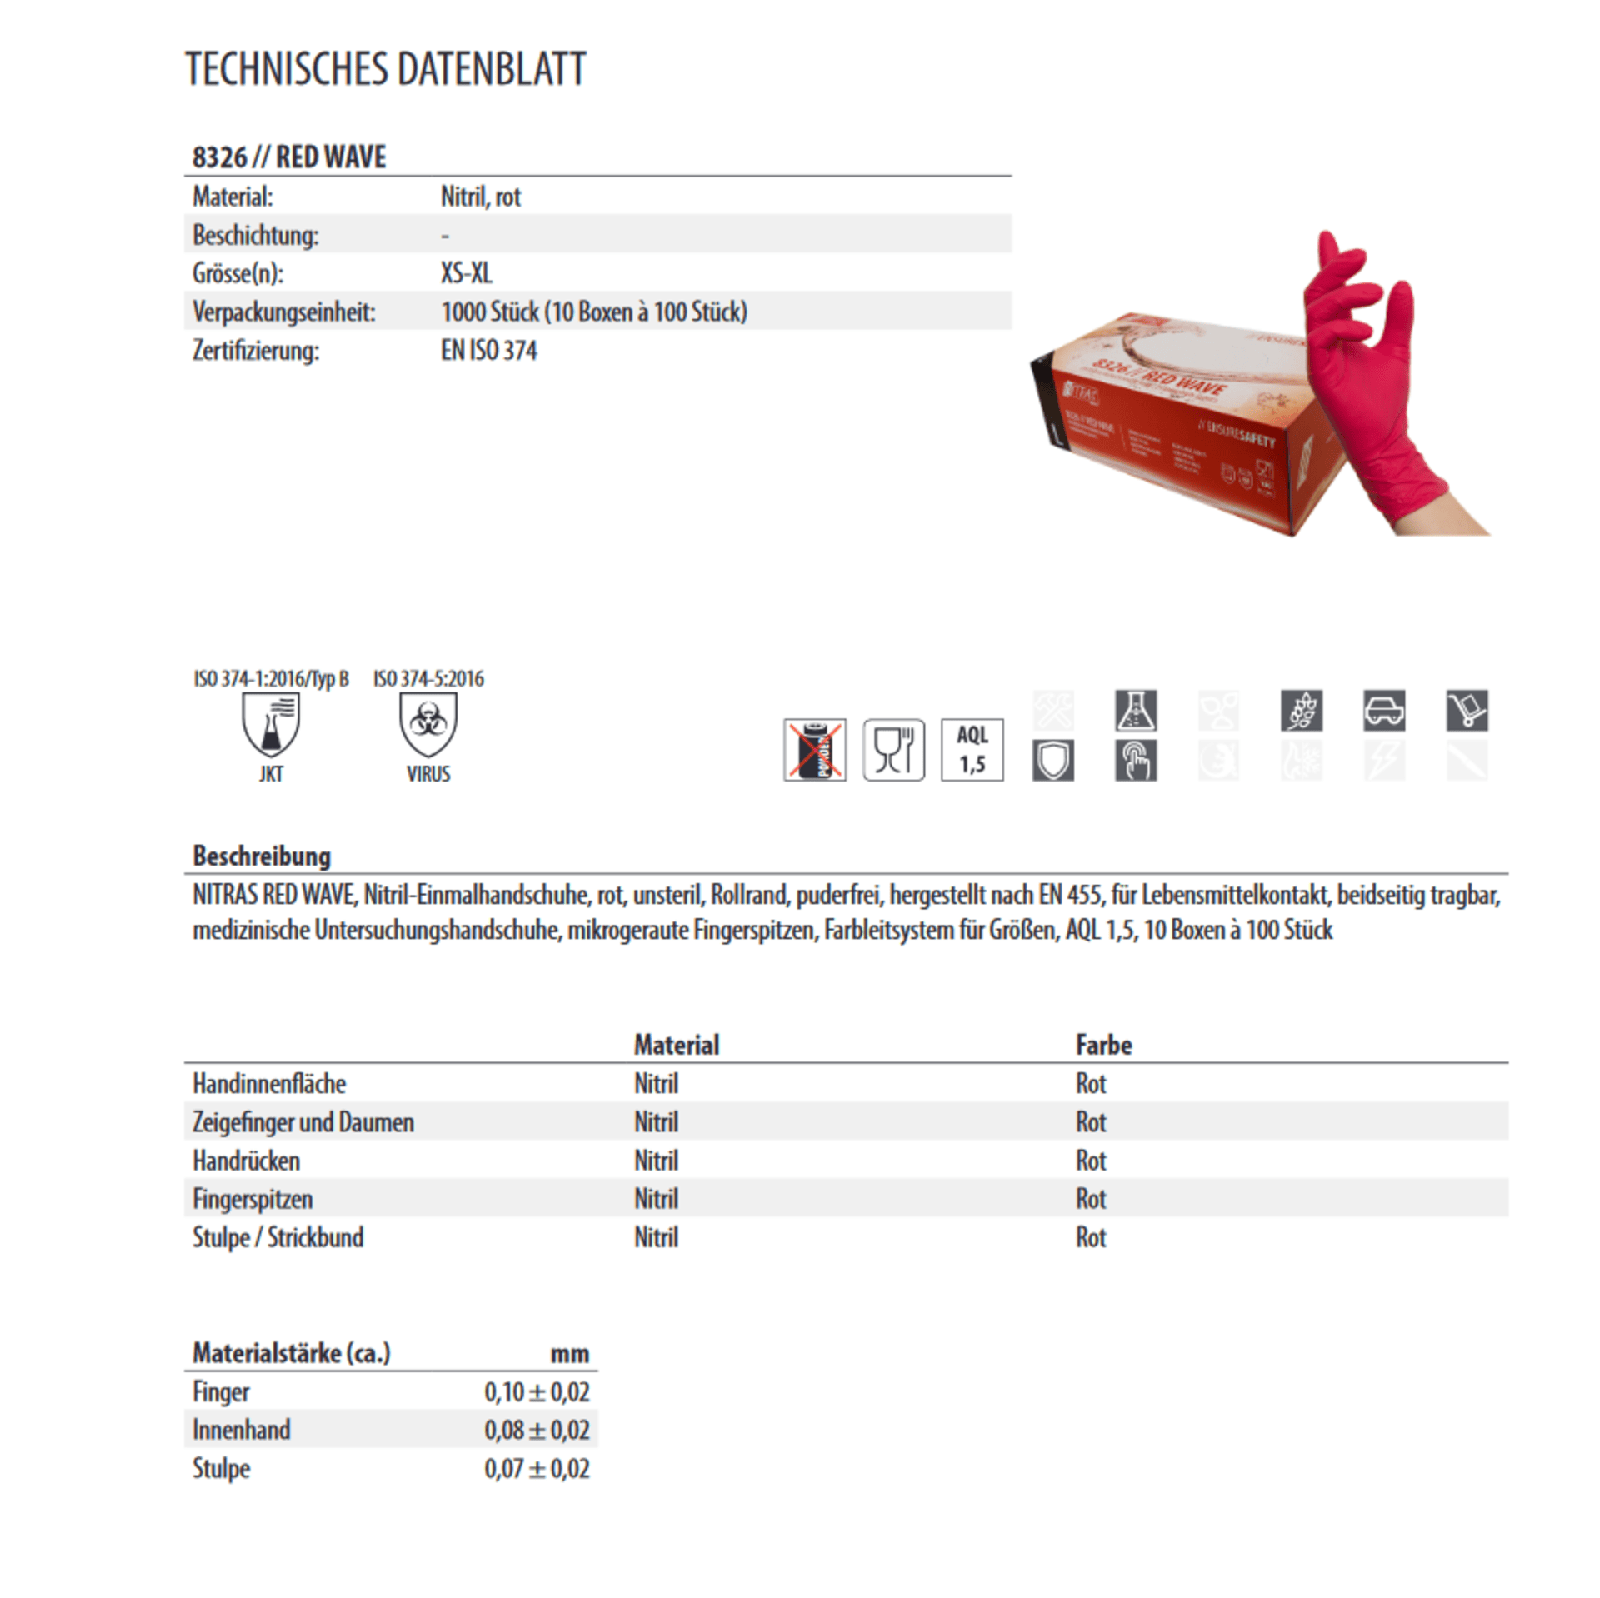 8326 Nitras rot Nitrilhandschuh Einmalhandschuh Box je 100 Stück puderfrei latexfrei Gr S-XL Nitras Medical